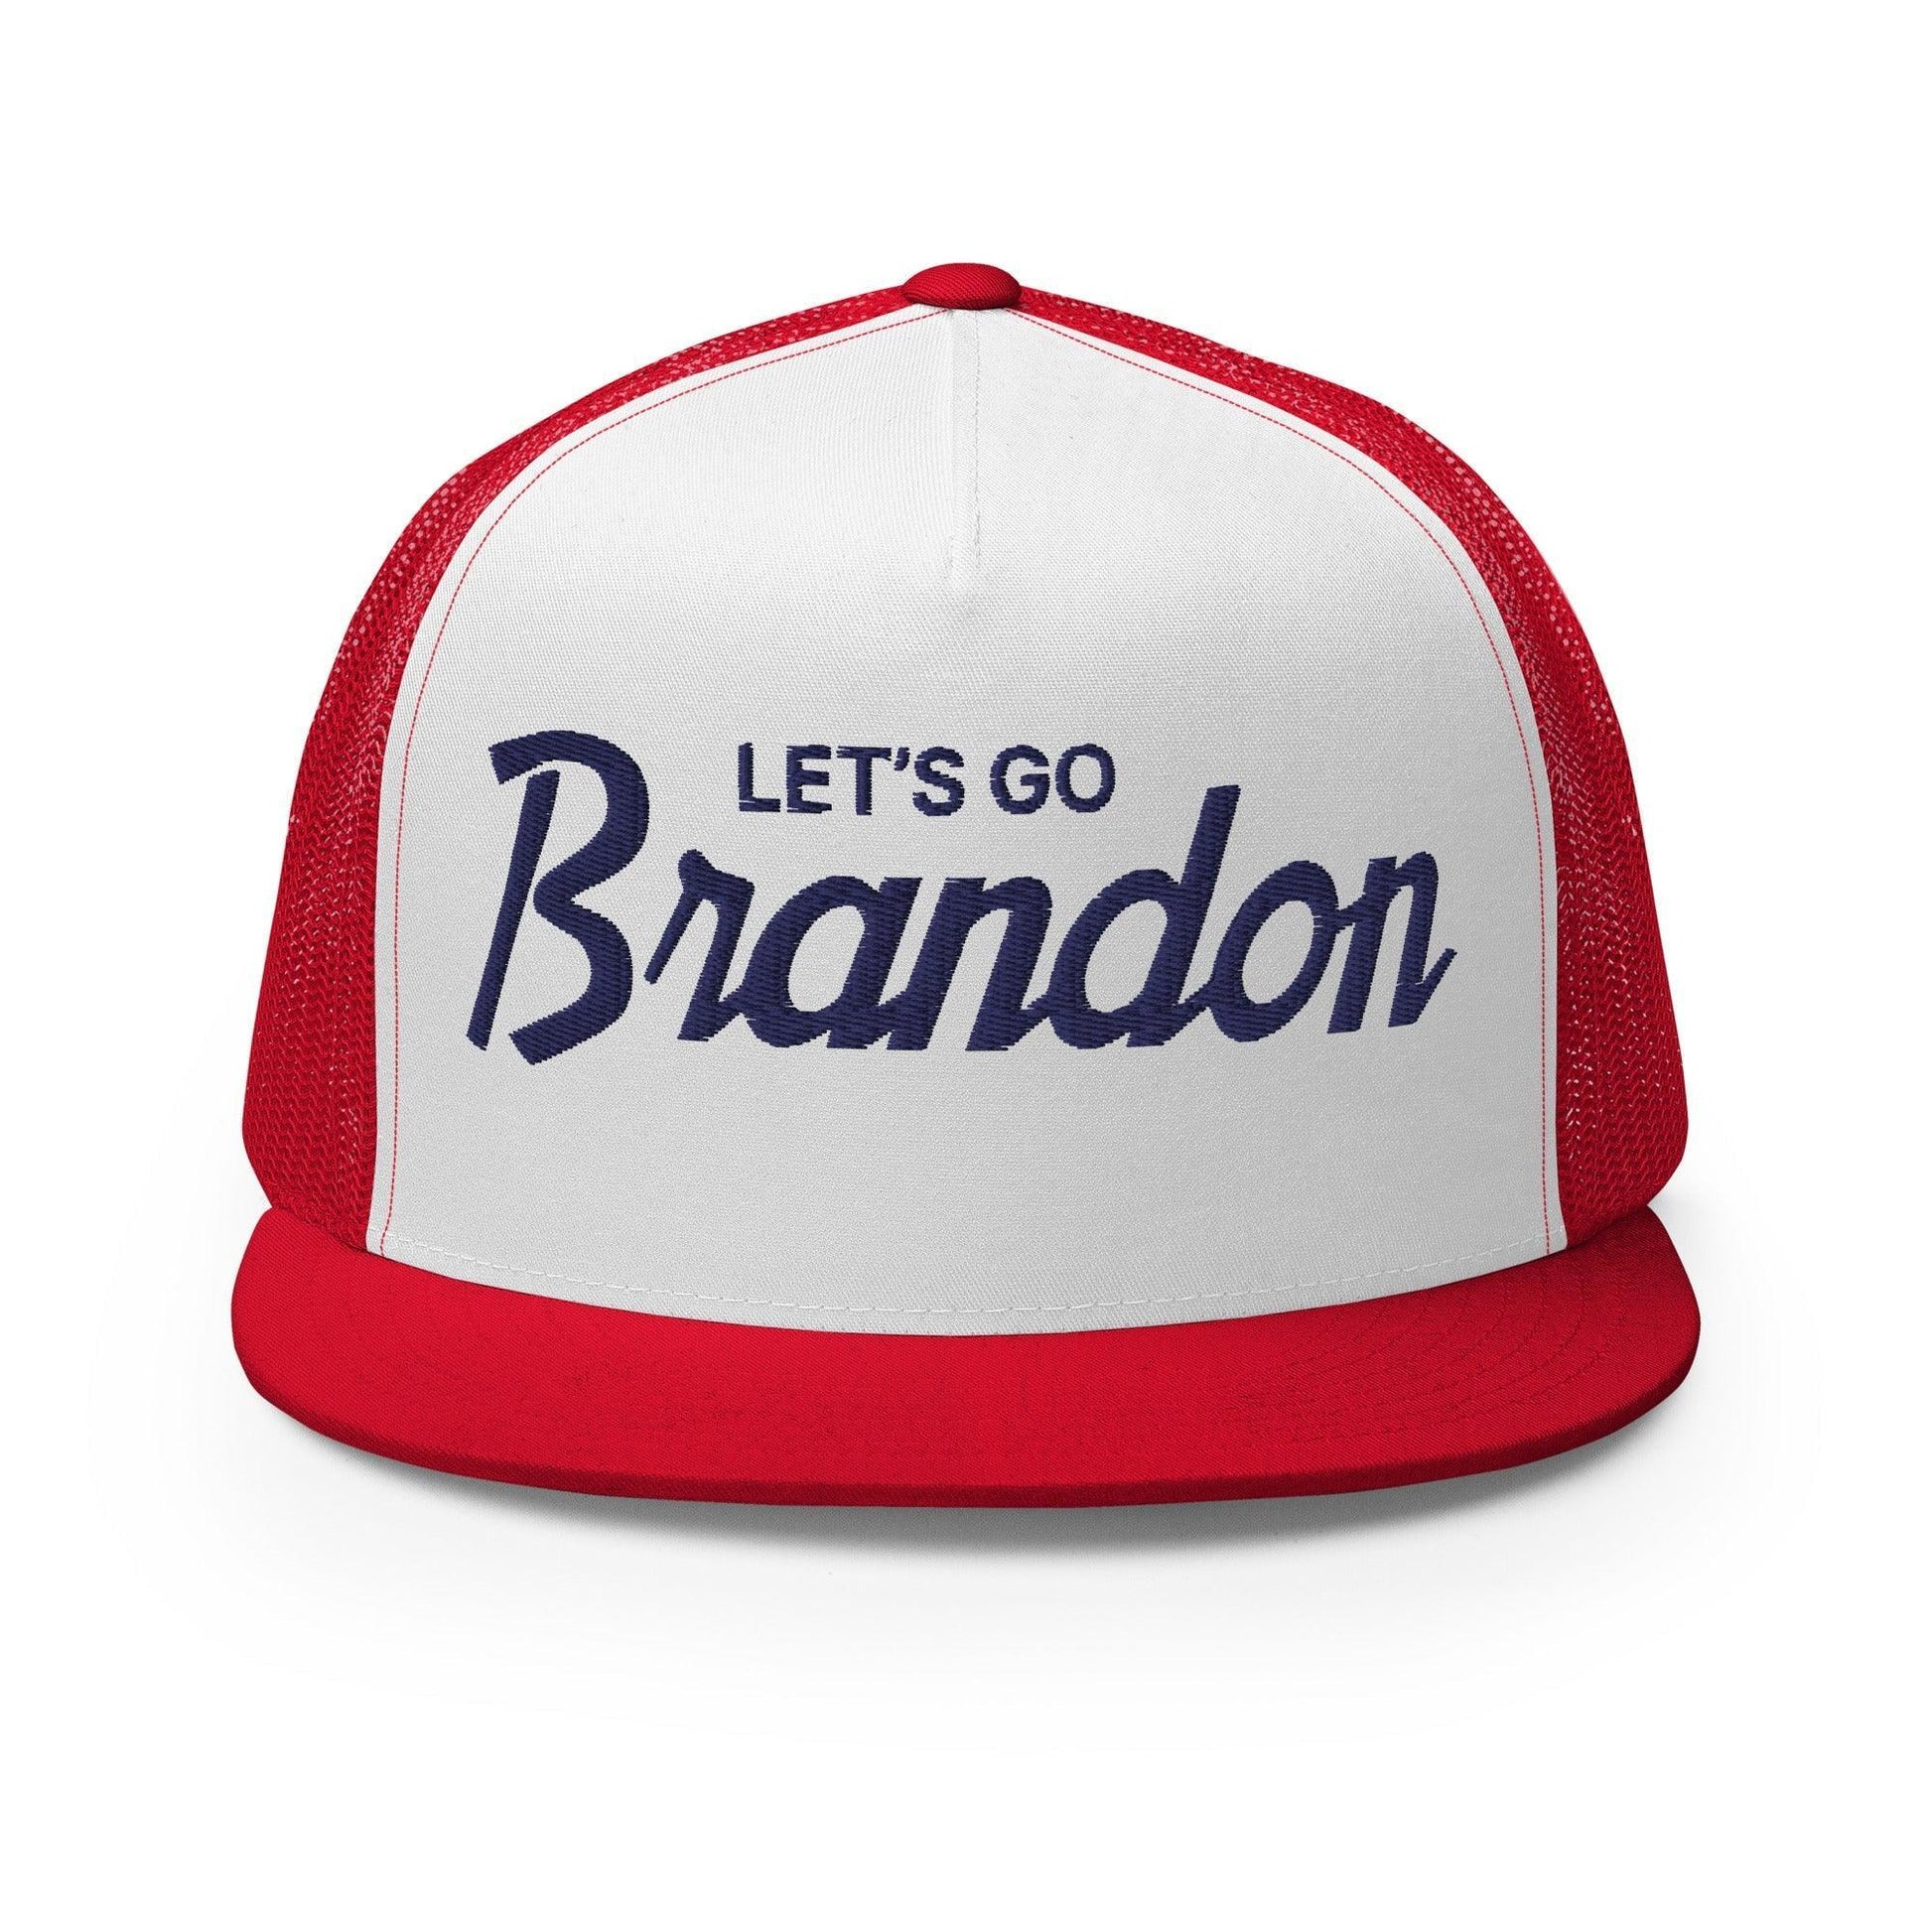 Let's Go Brandon Script Flat Bill Brim Snapback Trucker Hat Red/ White/ Red